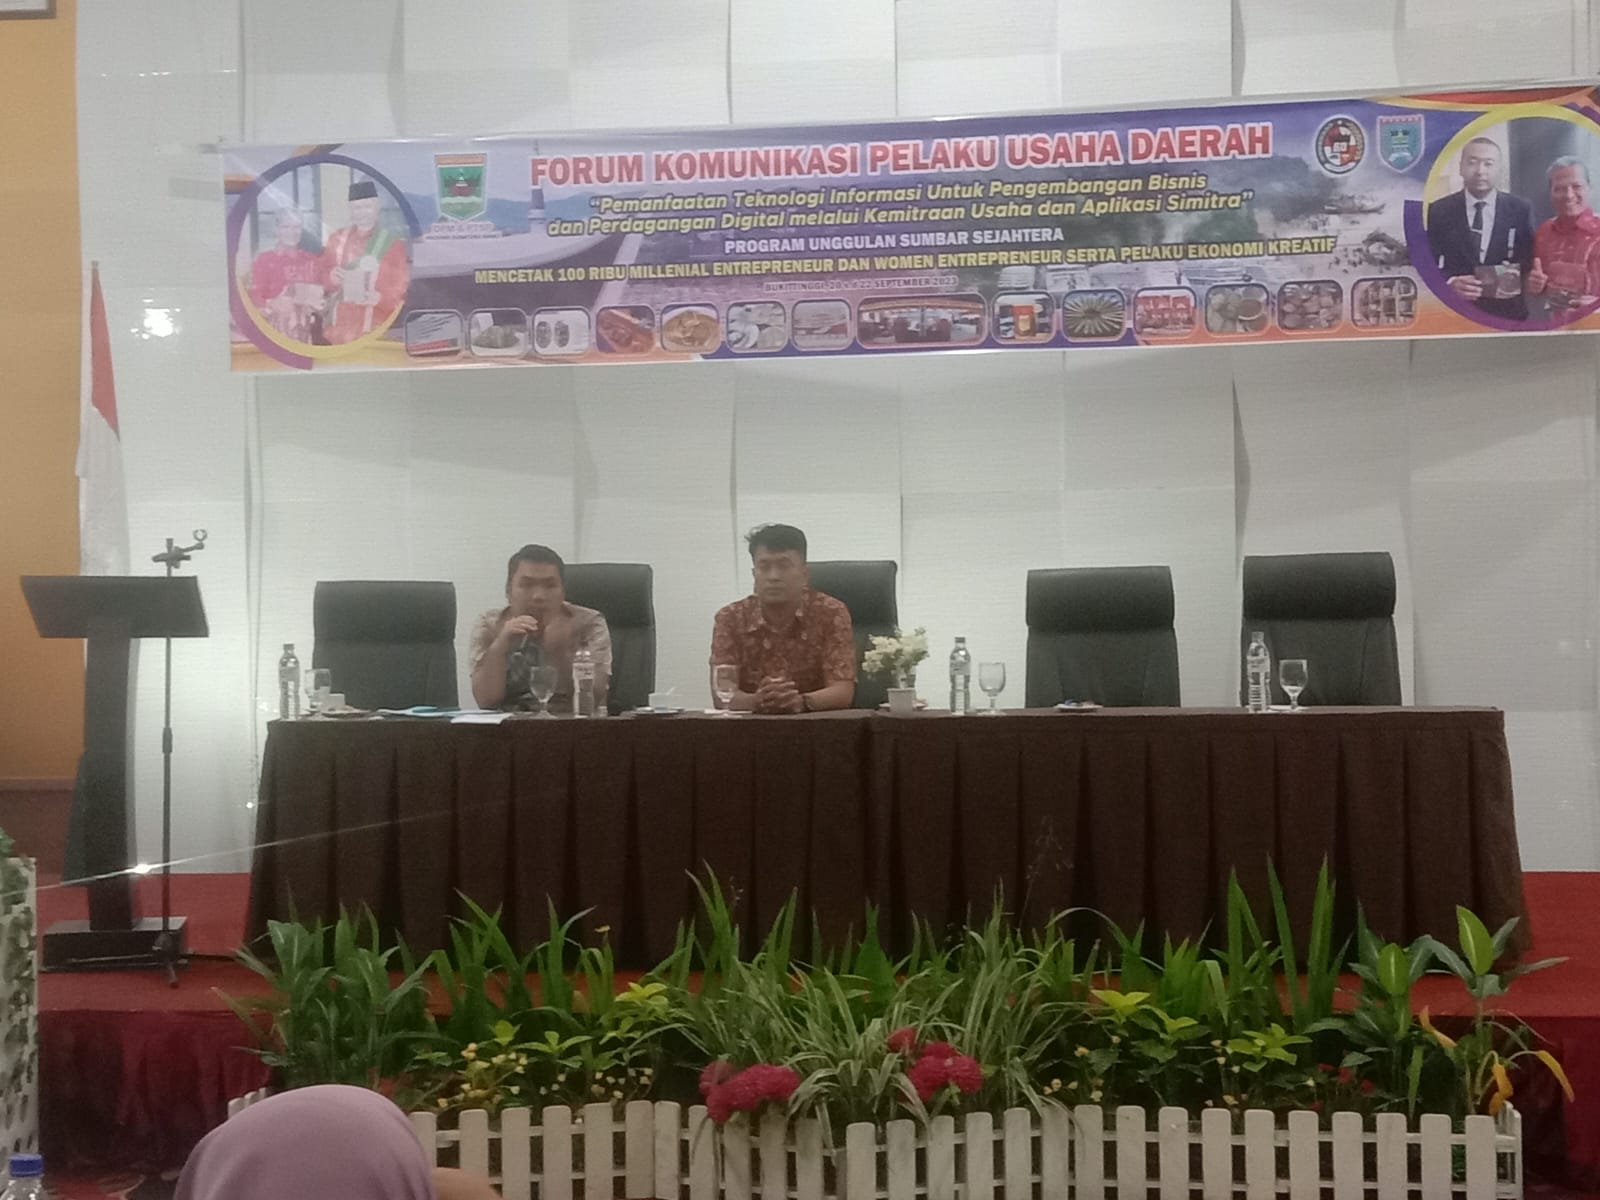 DPMPTSP Provinsi Sumatera Barat Mencetak 100.000 (seratus ribu) Entrepreneur dan Women Entrepreneur